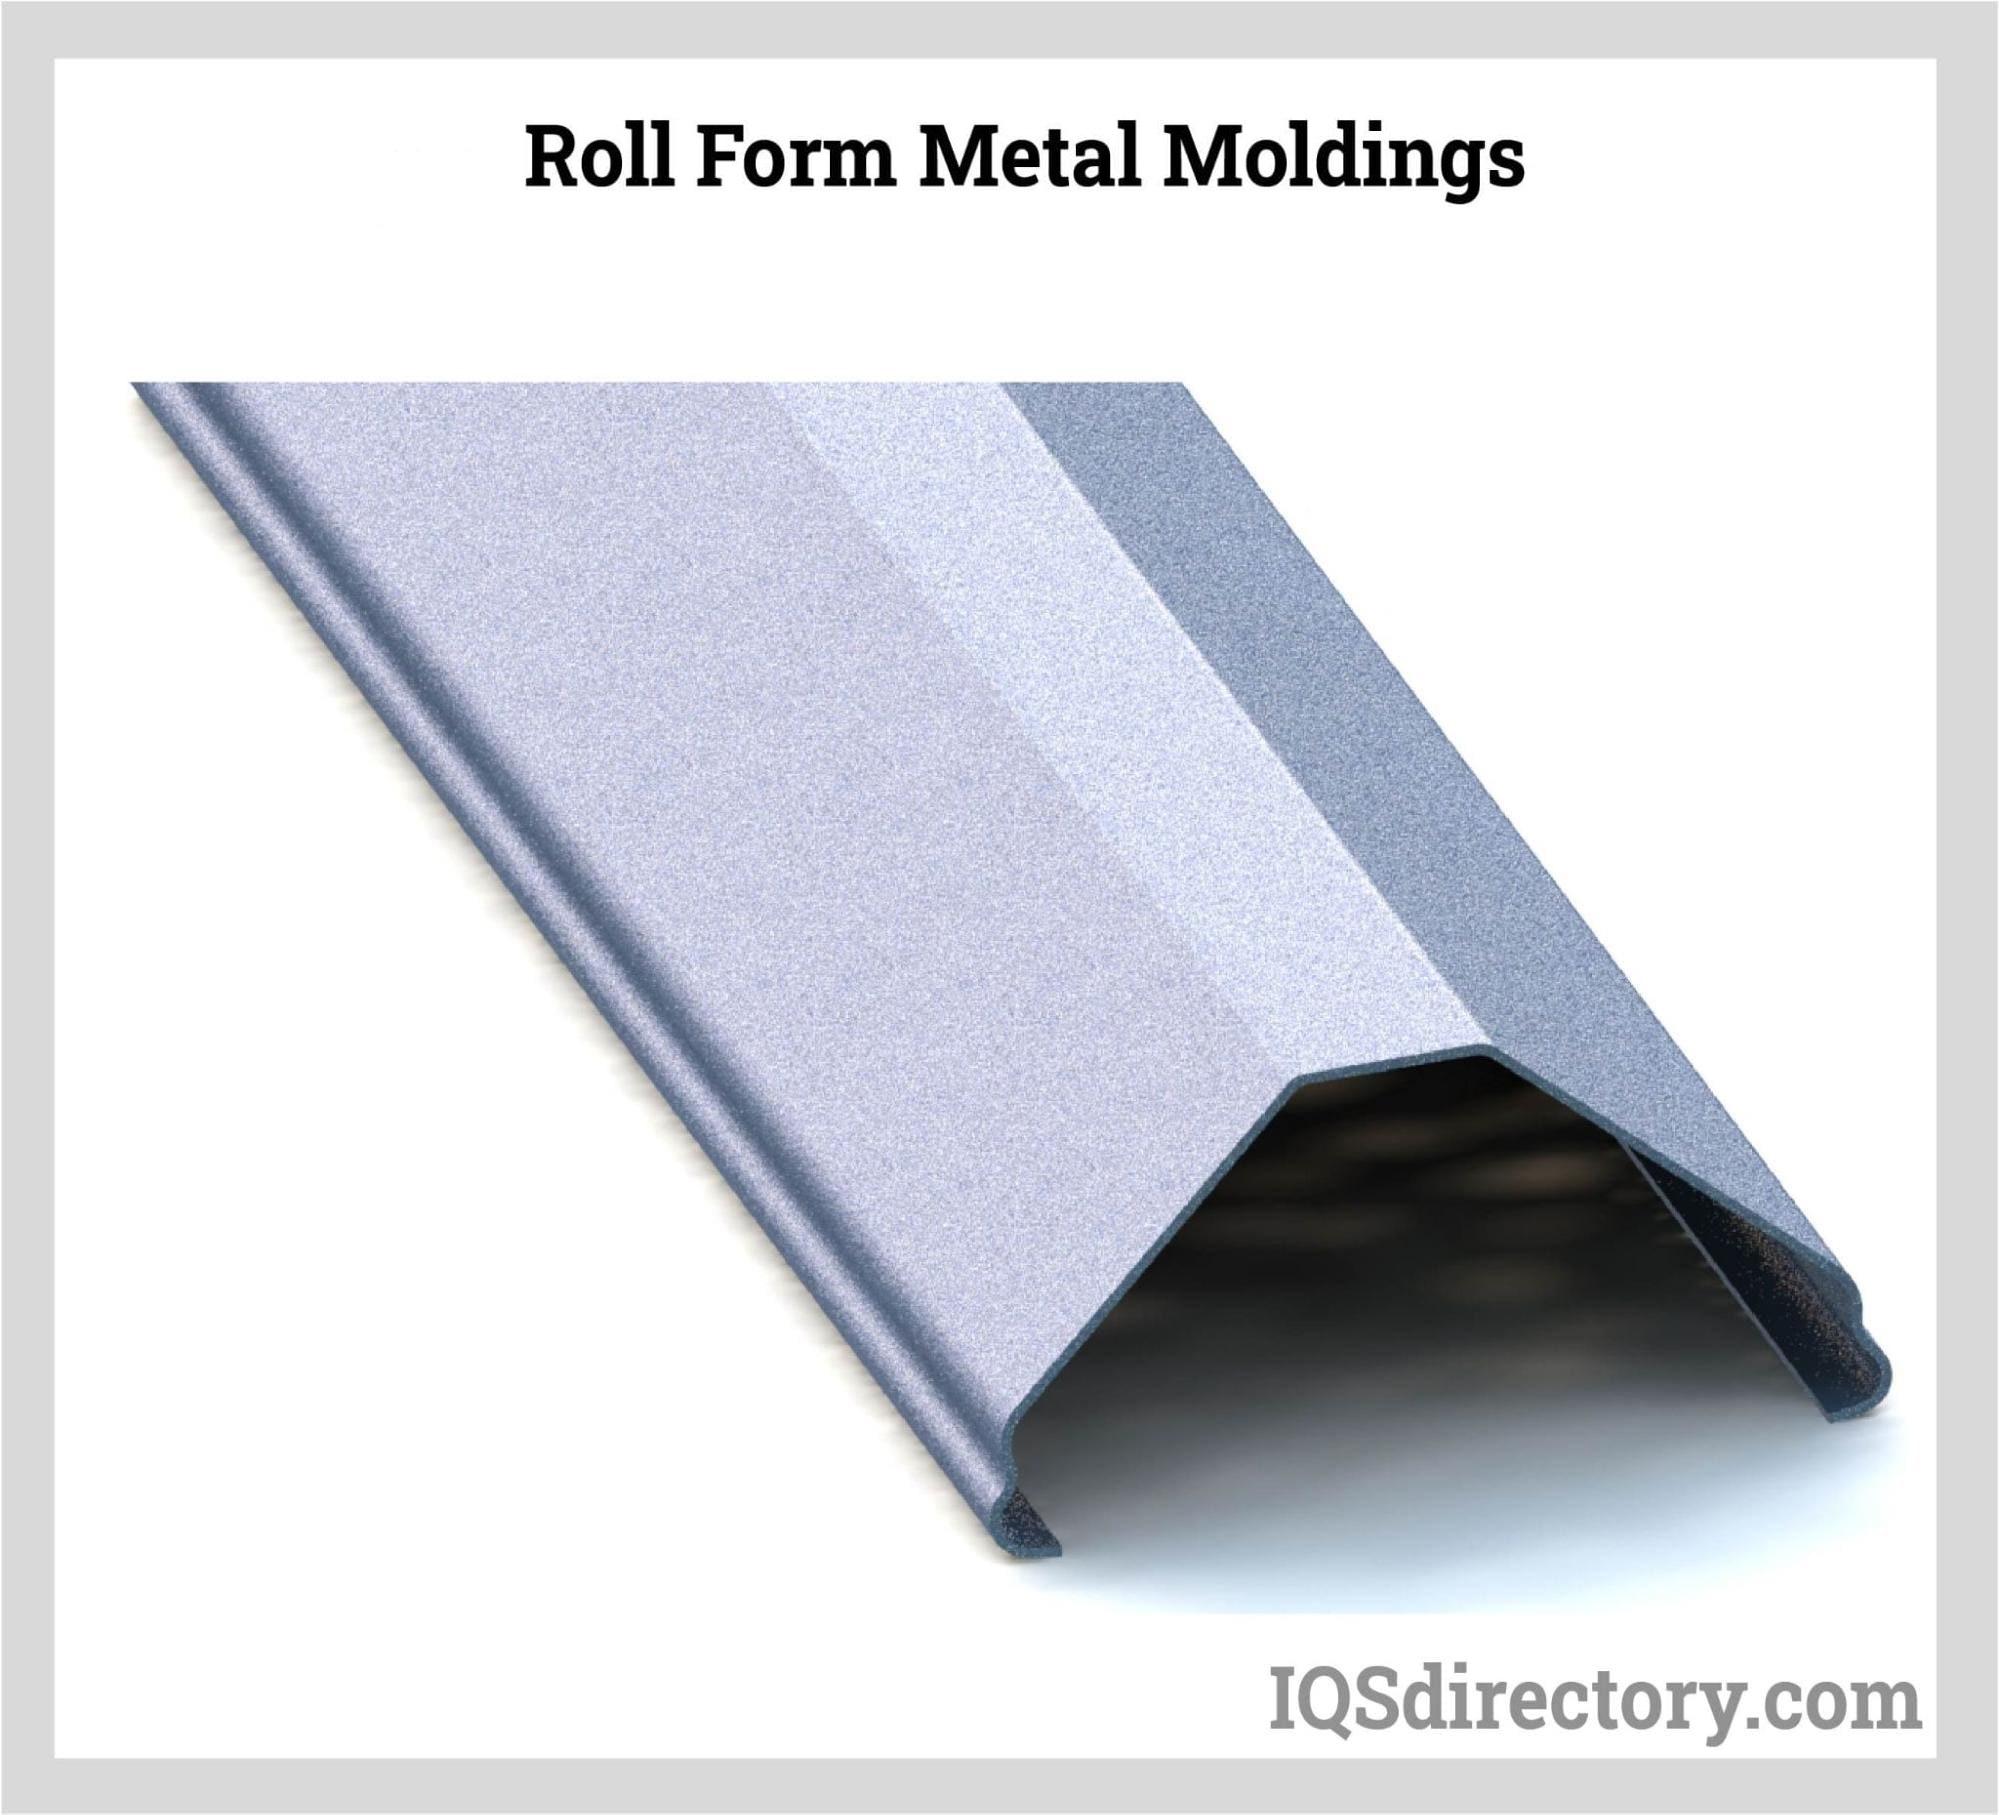 Roll Form Metal Moldings